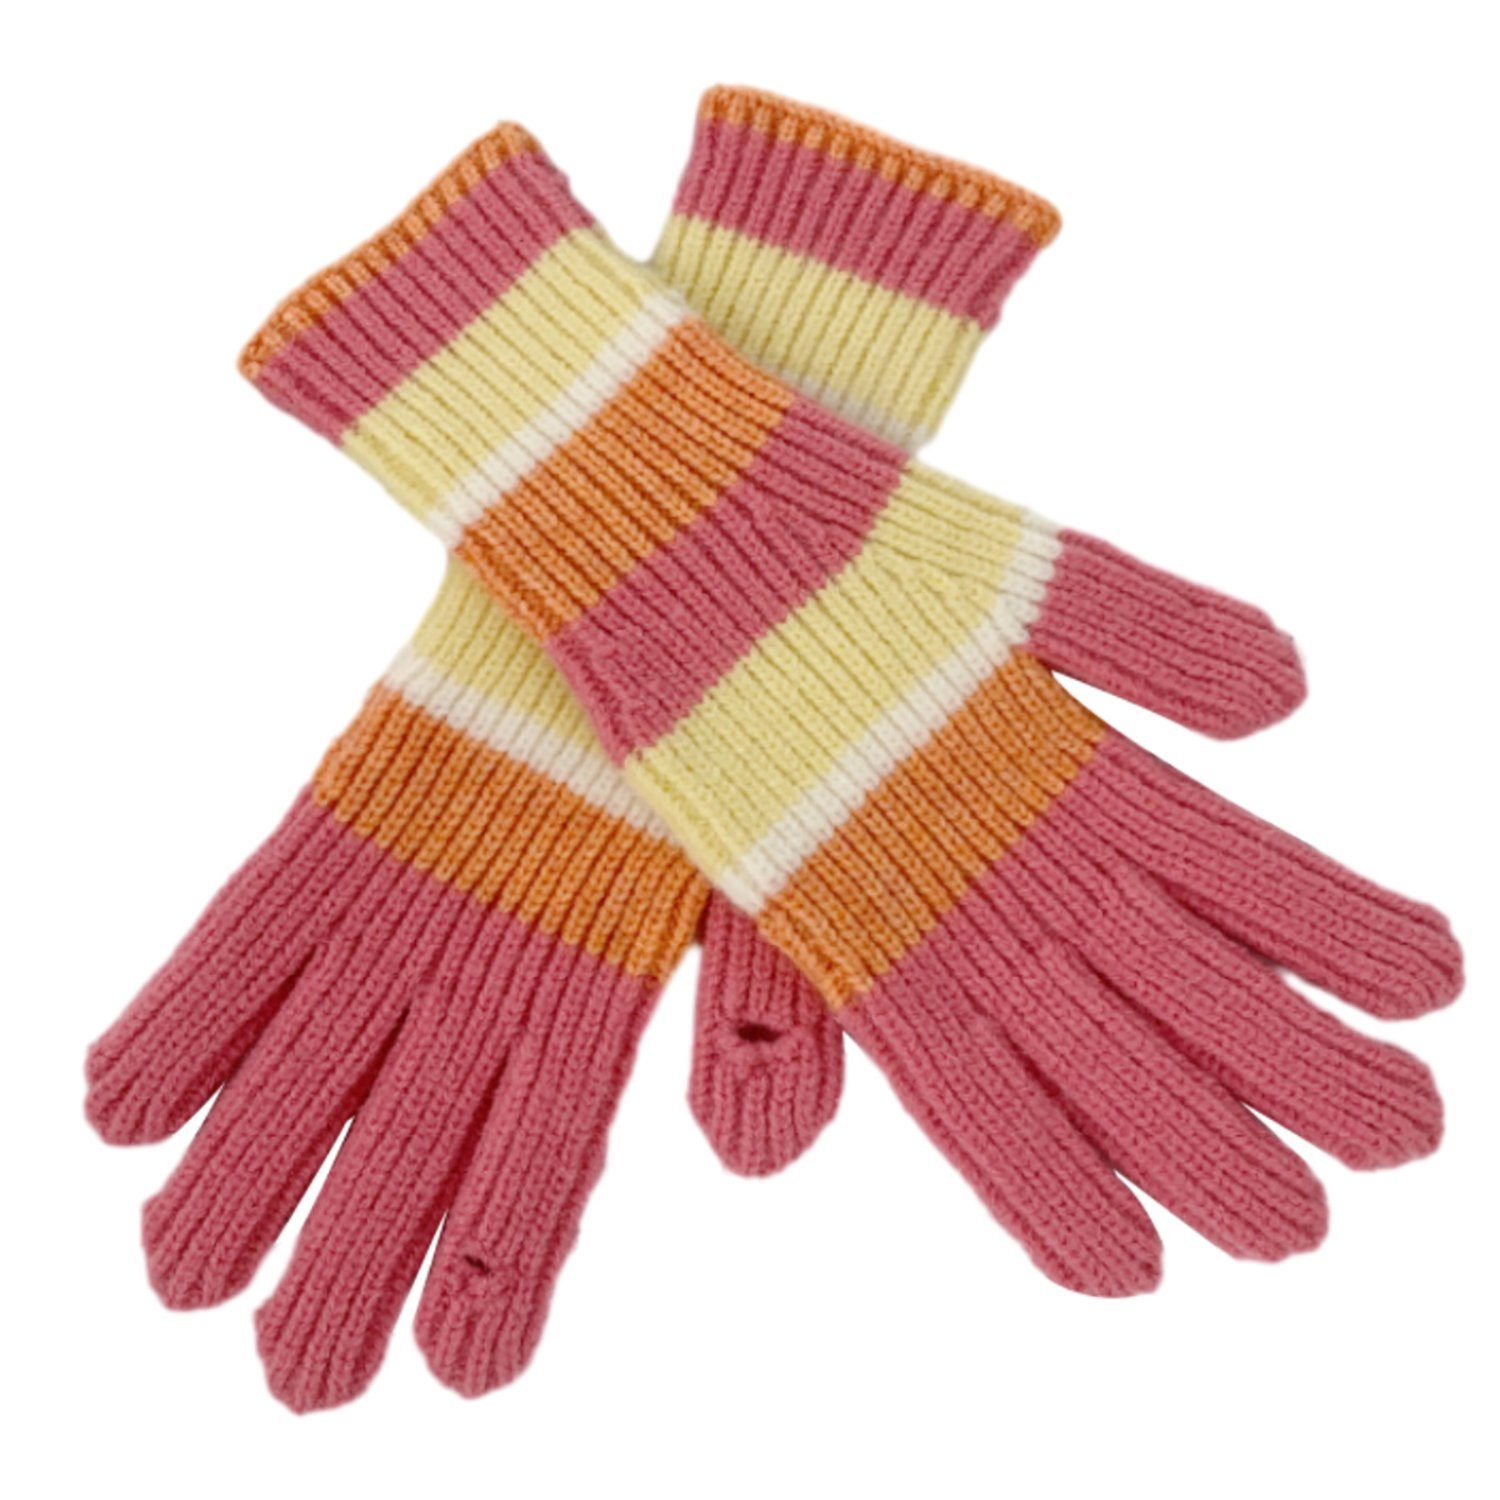 Einemgeld Strickhandschuhe 1 Paar Damen Winter Touchscreen Handschuhe, elastische,Thermohandschuh